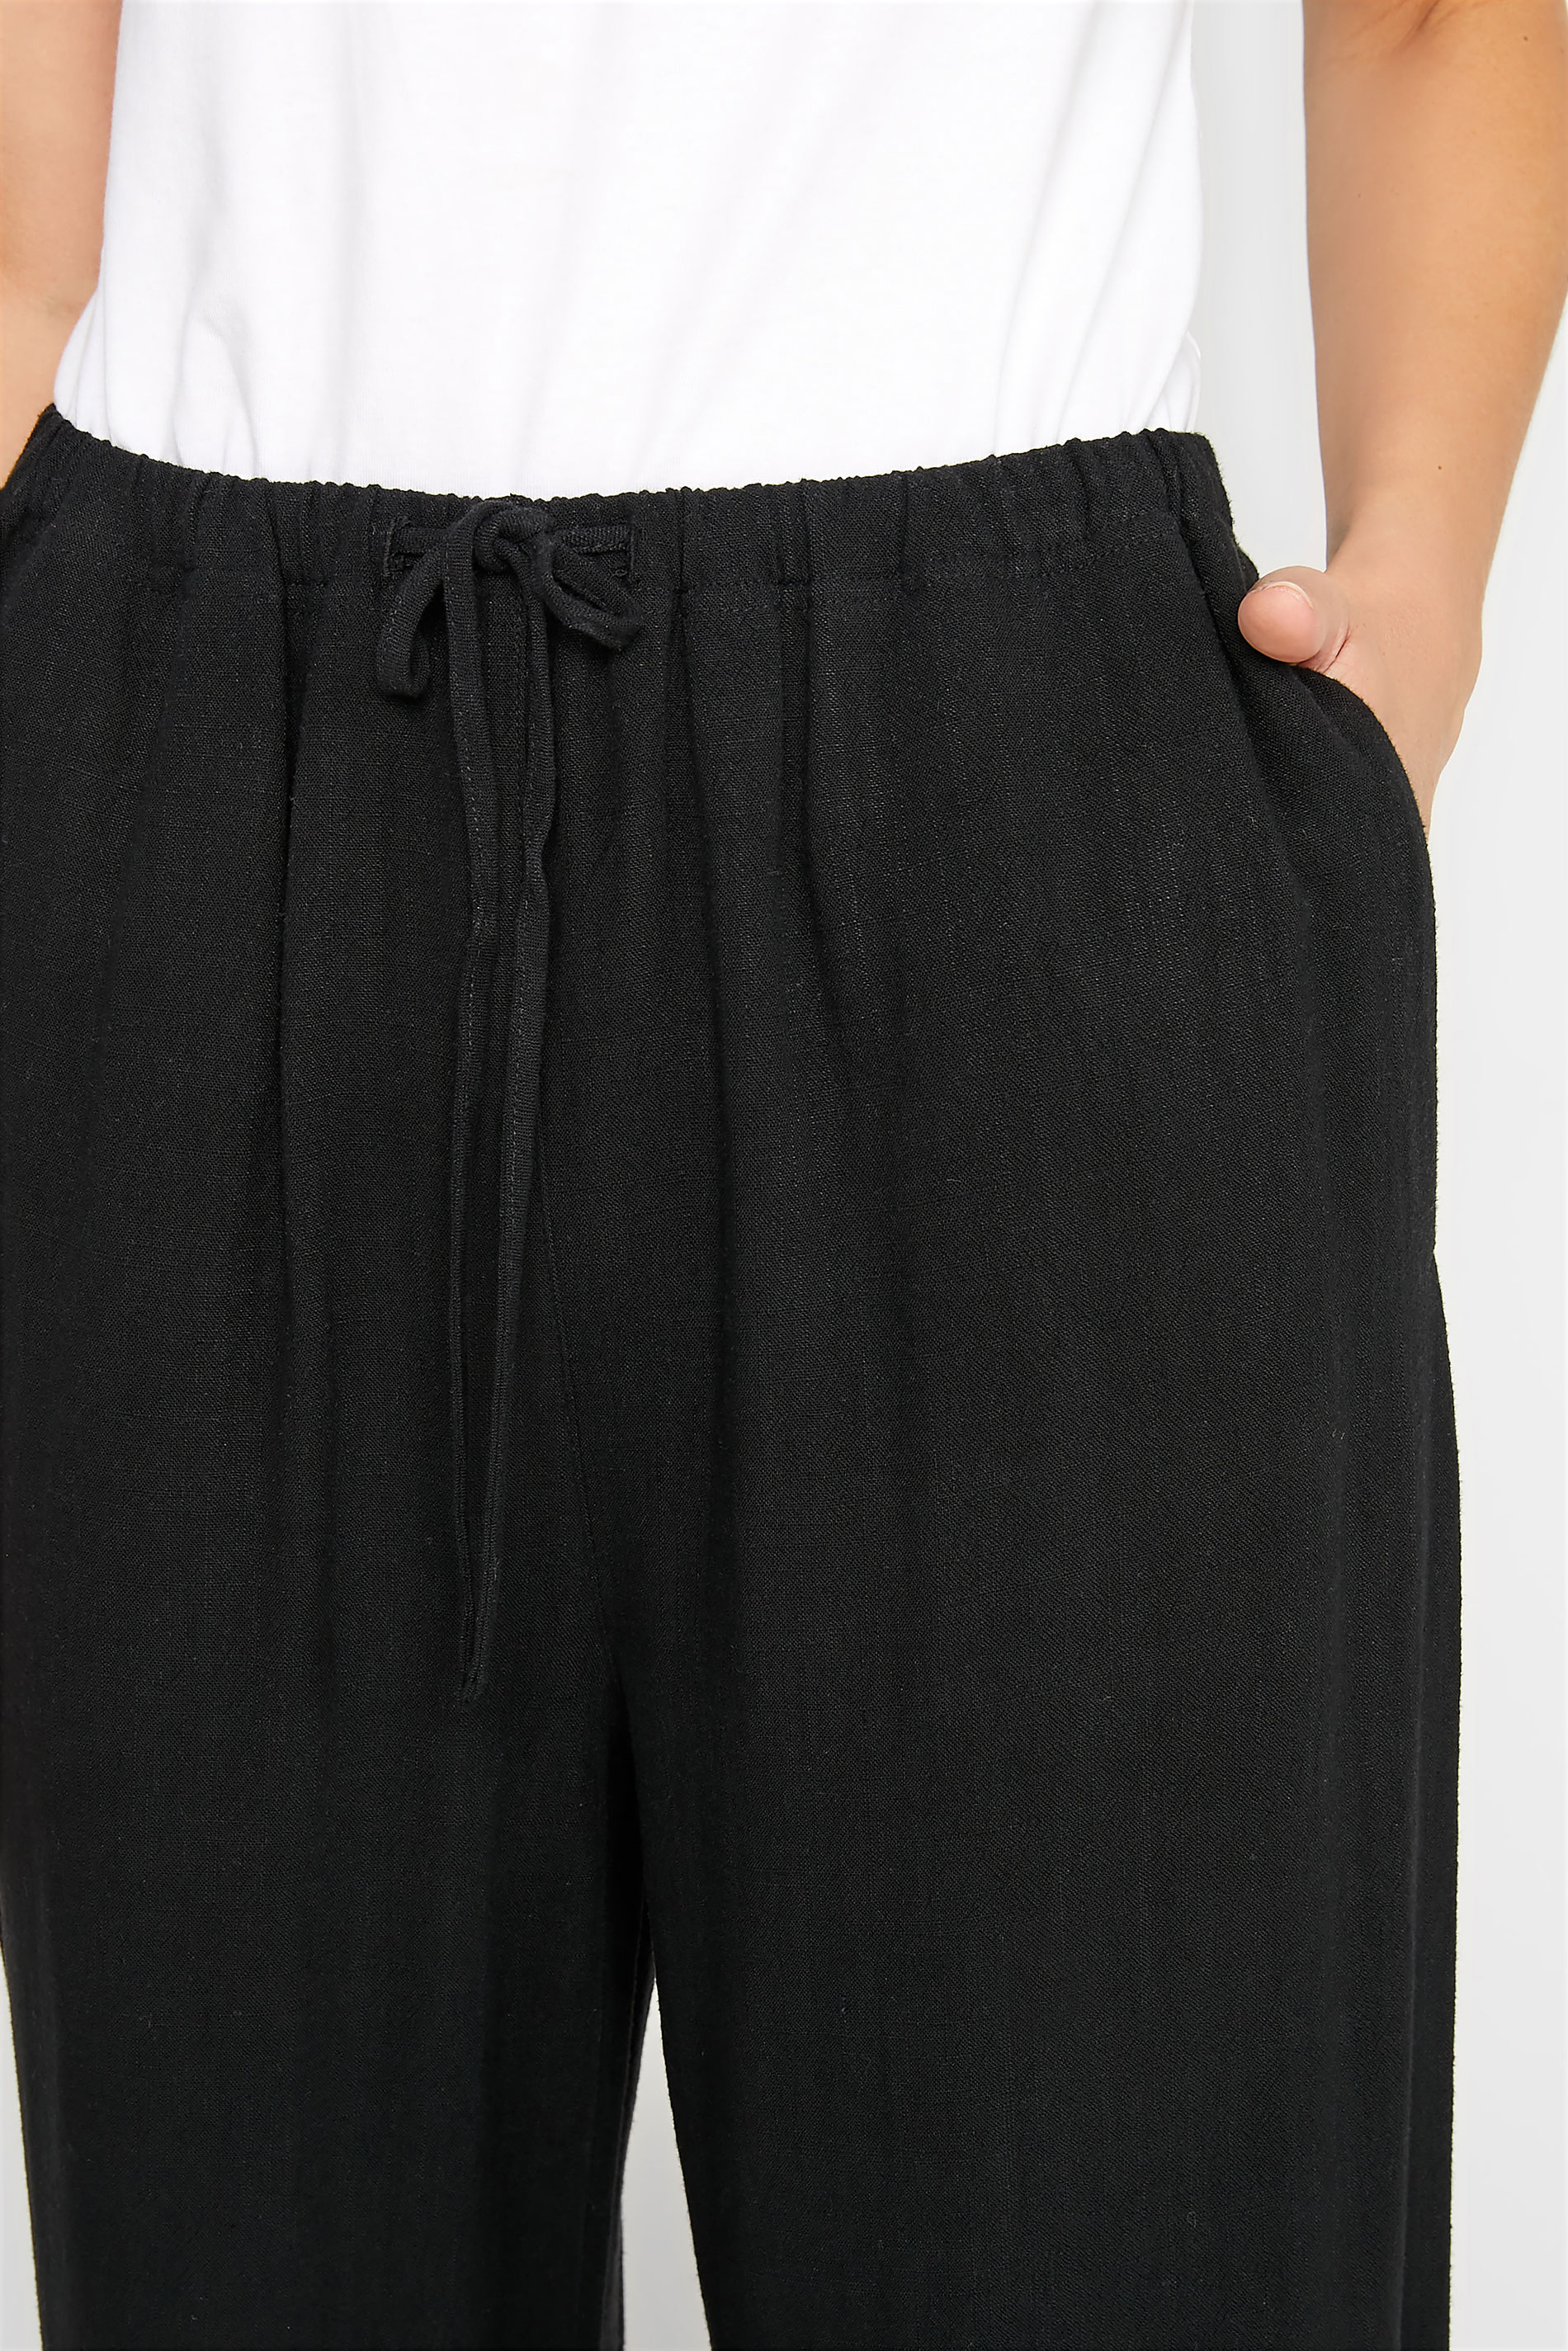 LTS Tall Women's Black Linen Blend Cropped Trousers | Long Tall Sally